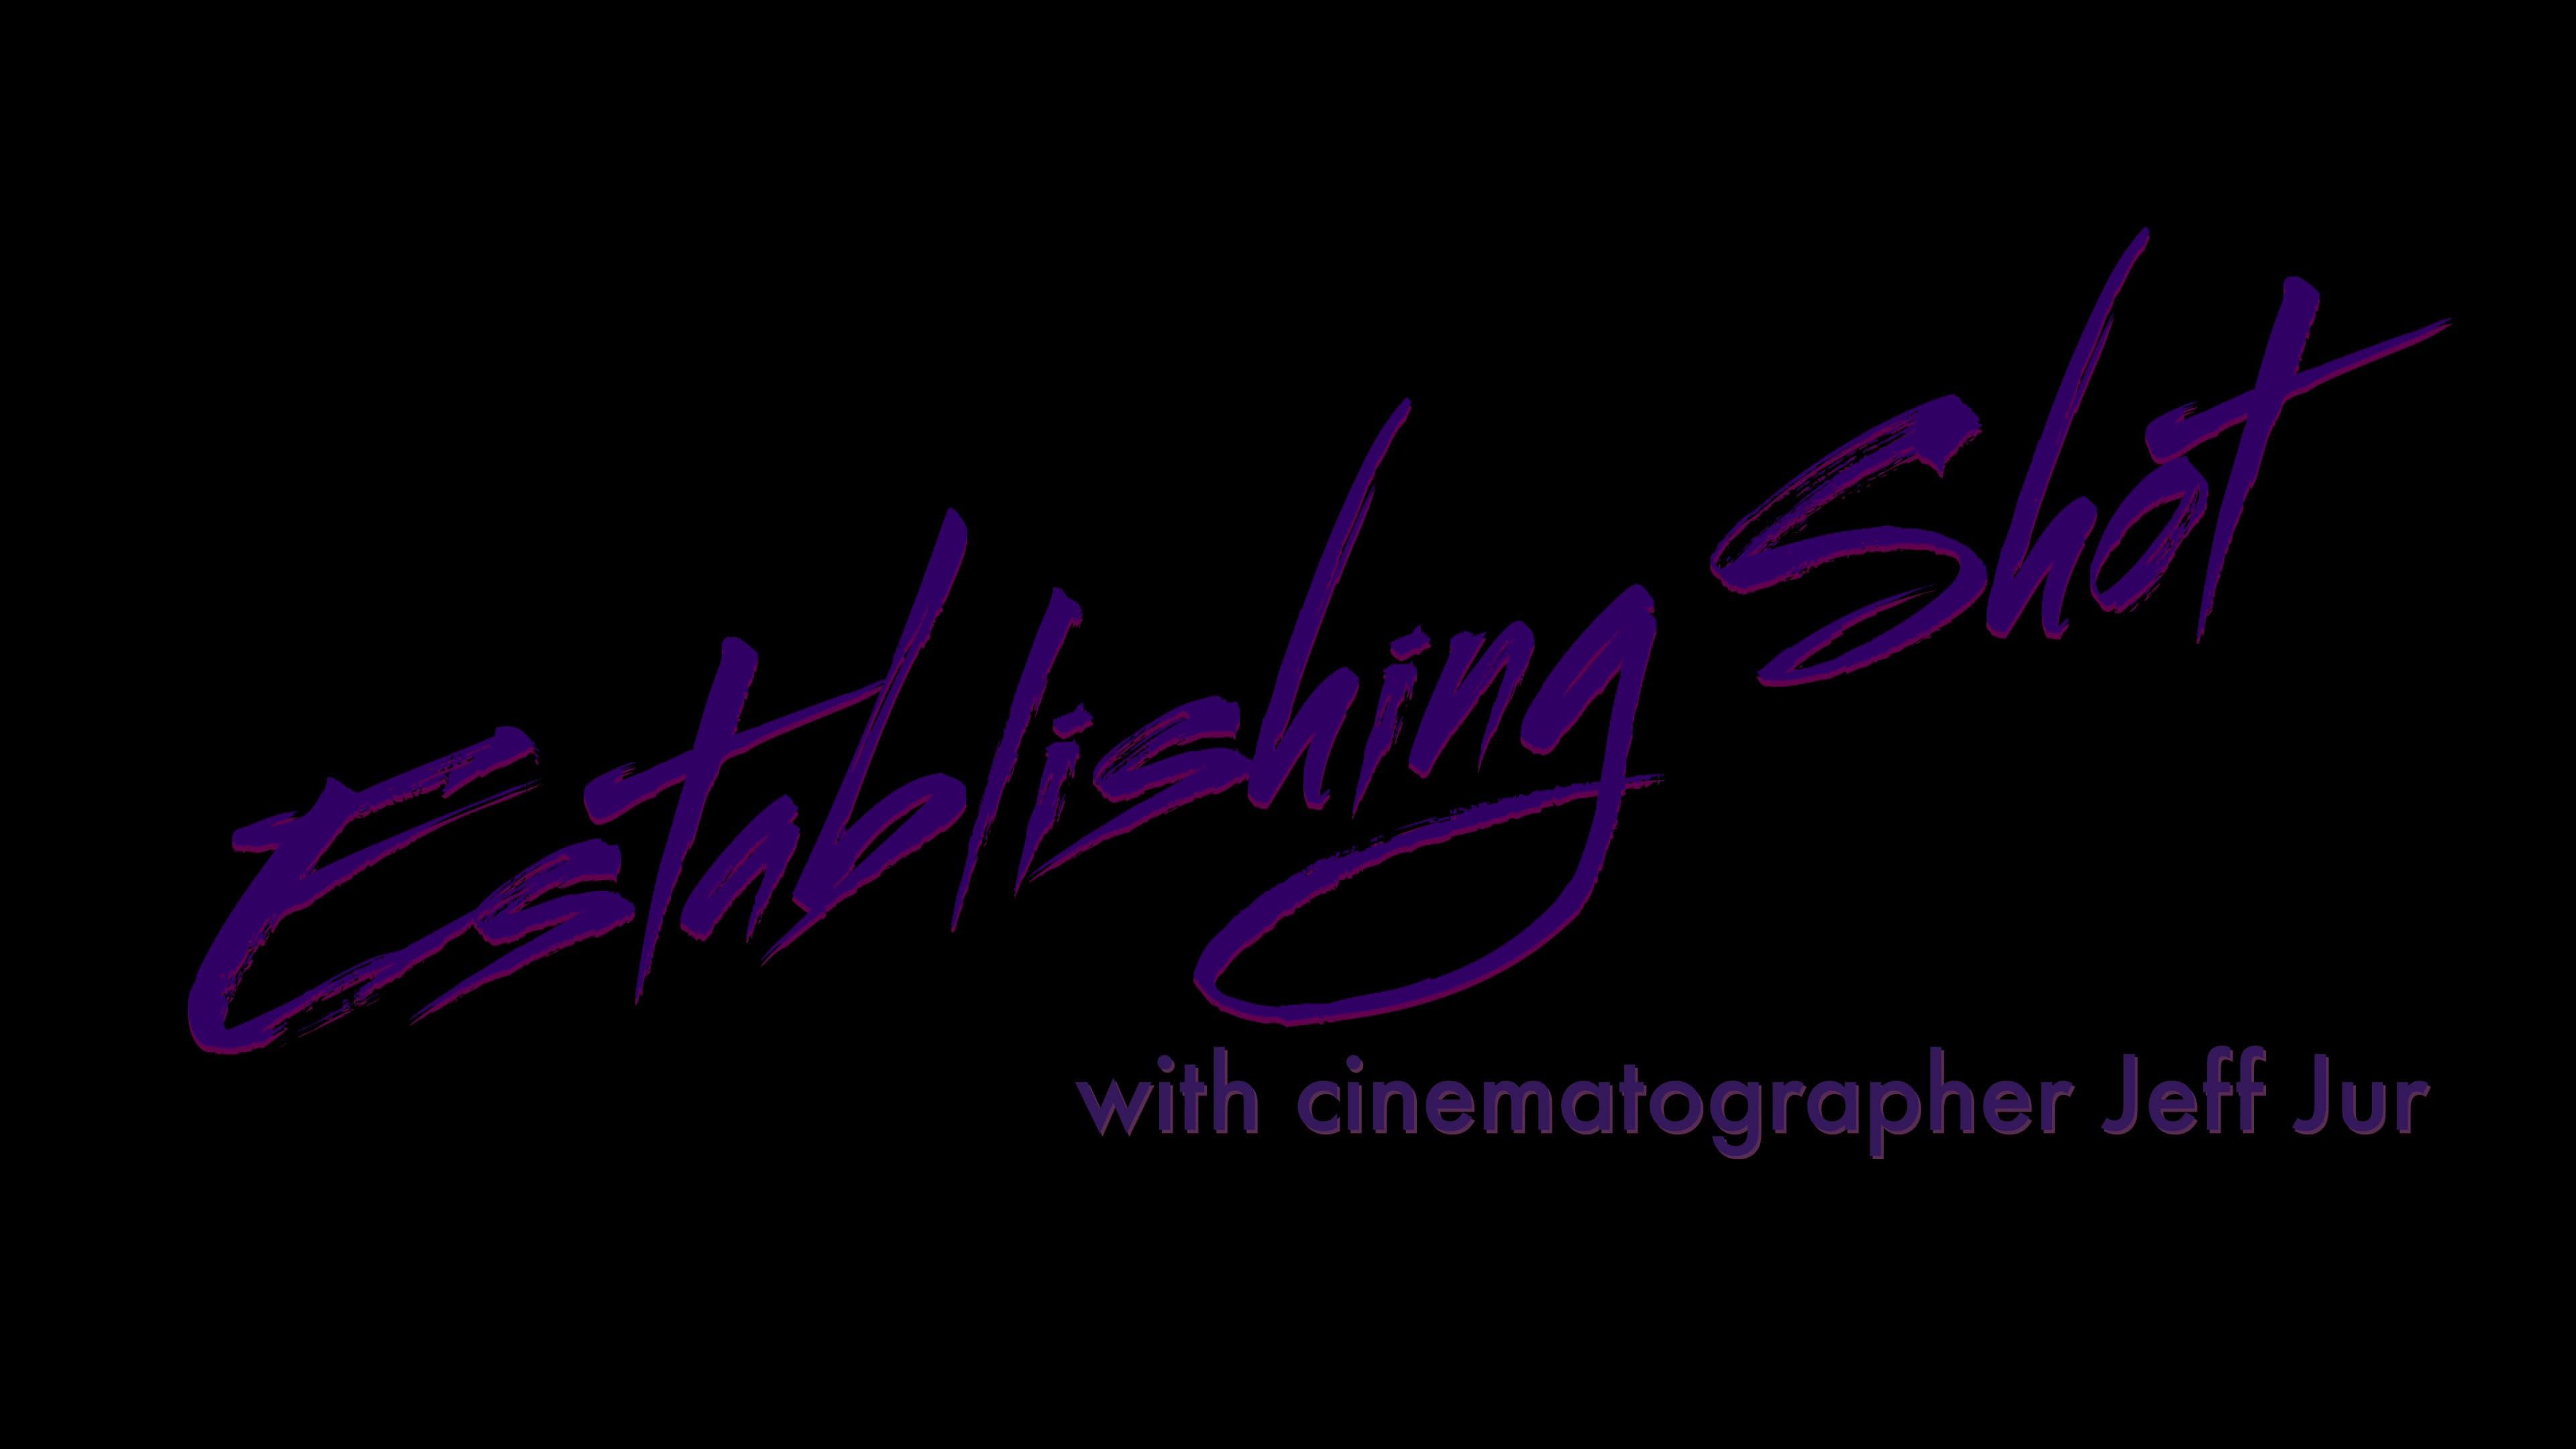 Establishing Shot with Cinematographer Jeff Jur backdrop